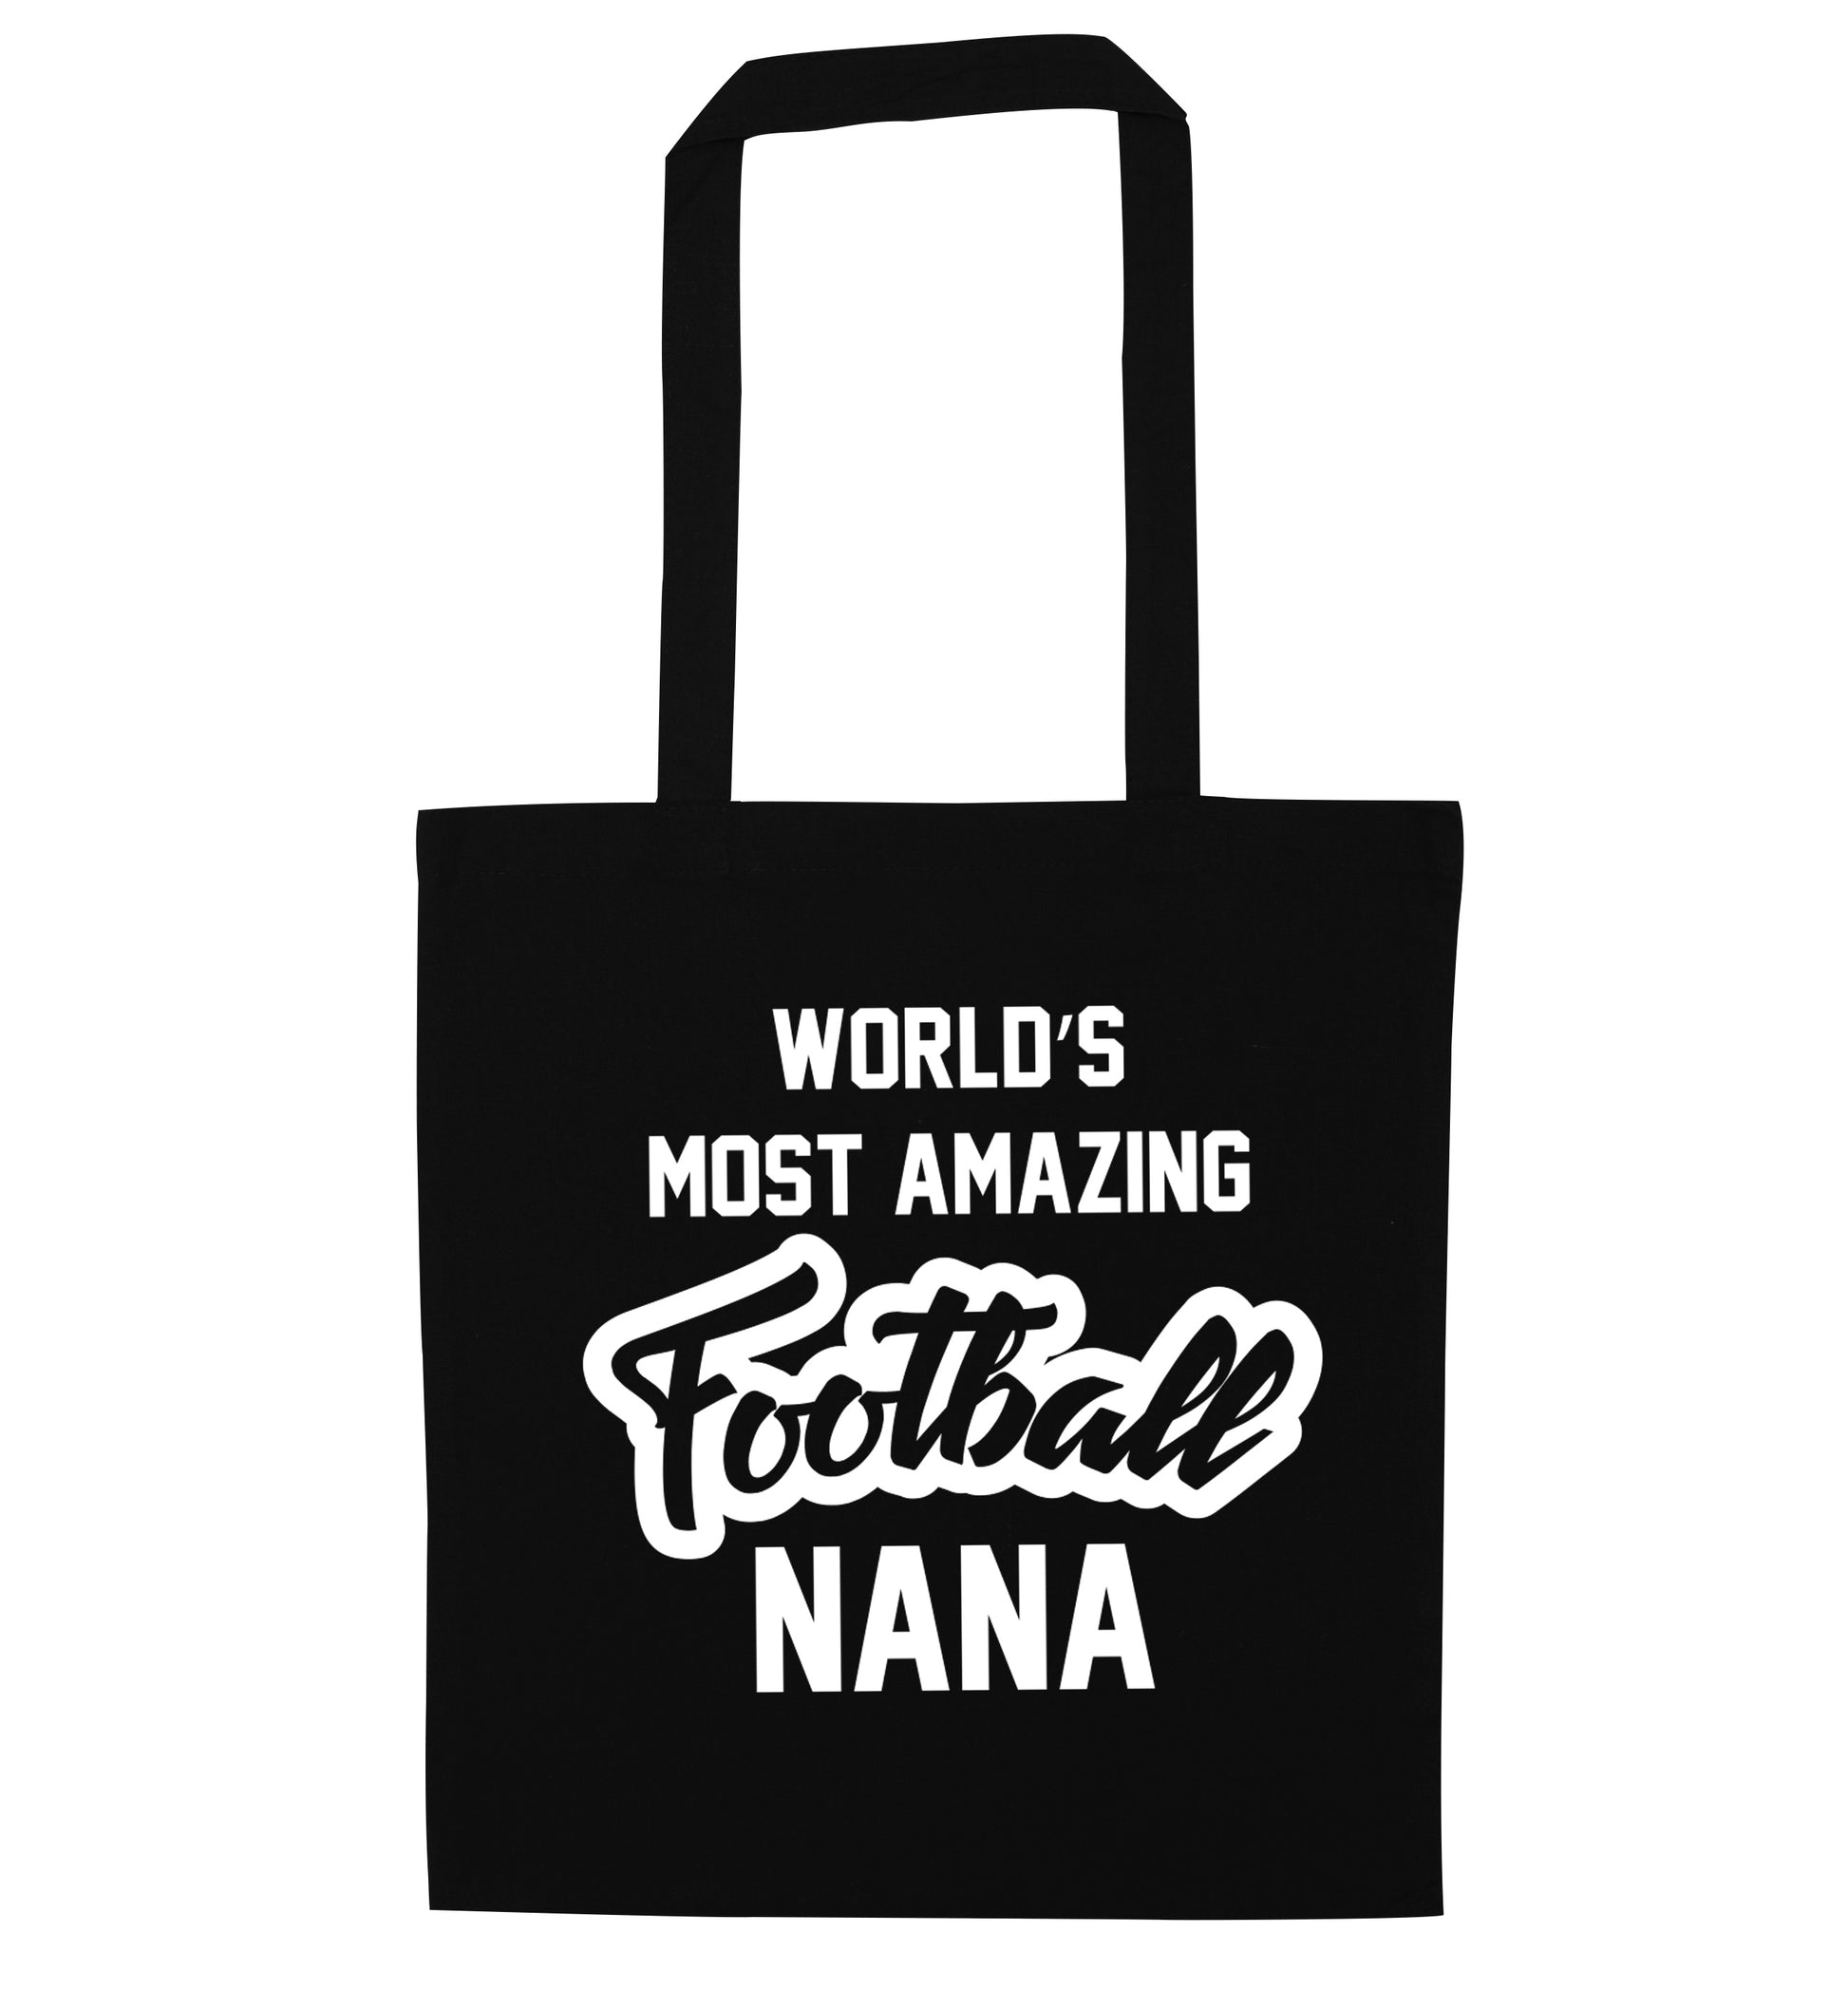 Worlds most amazing football nana black tote bag